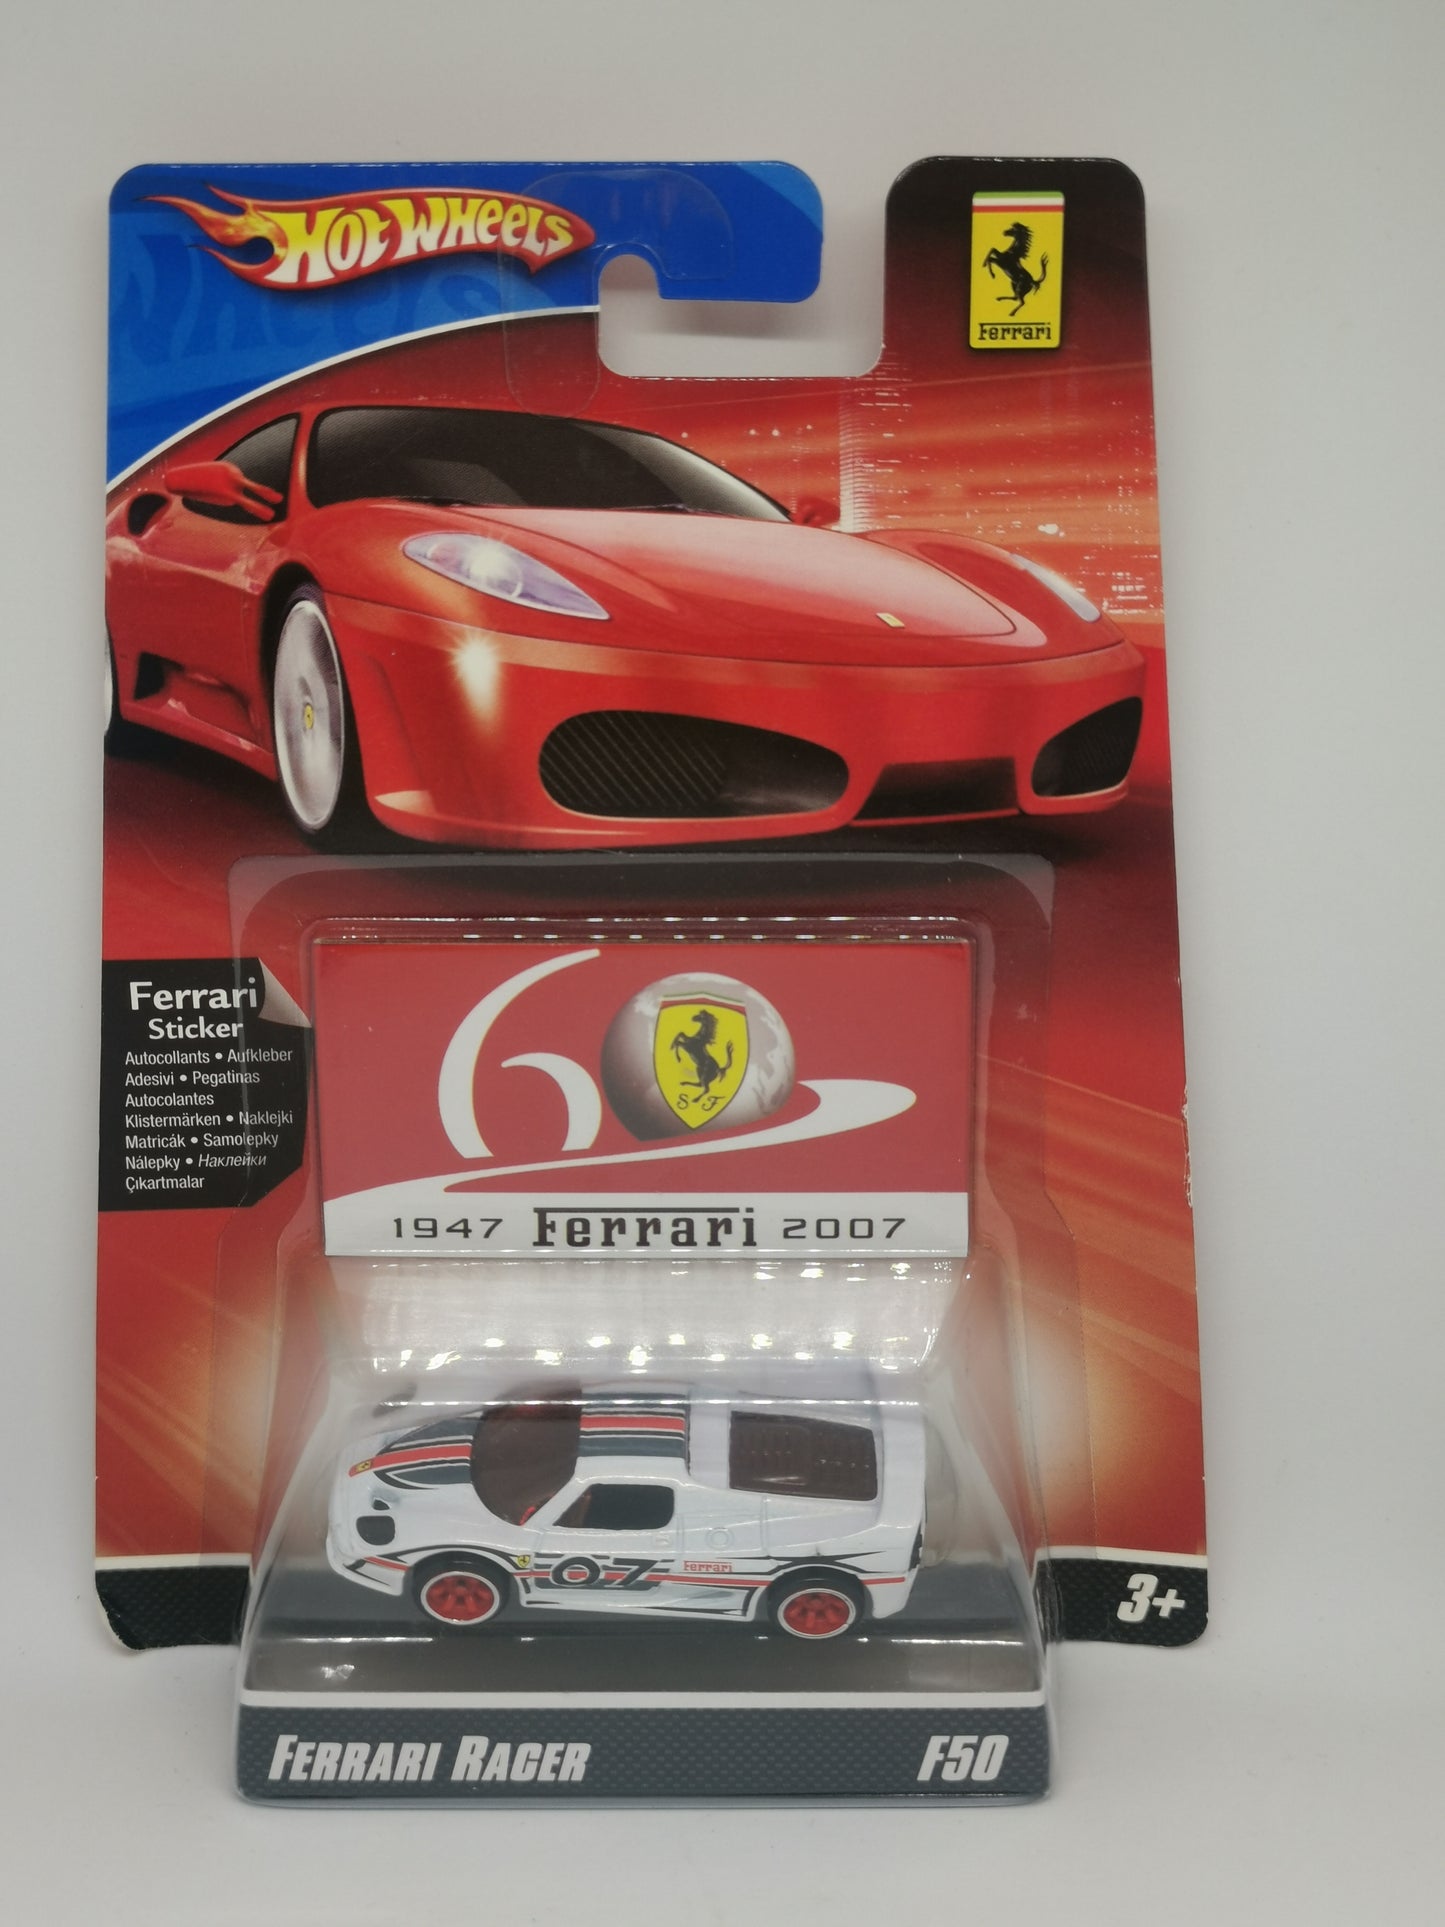 Hot Wheels Ferrari Racer F50